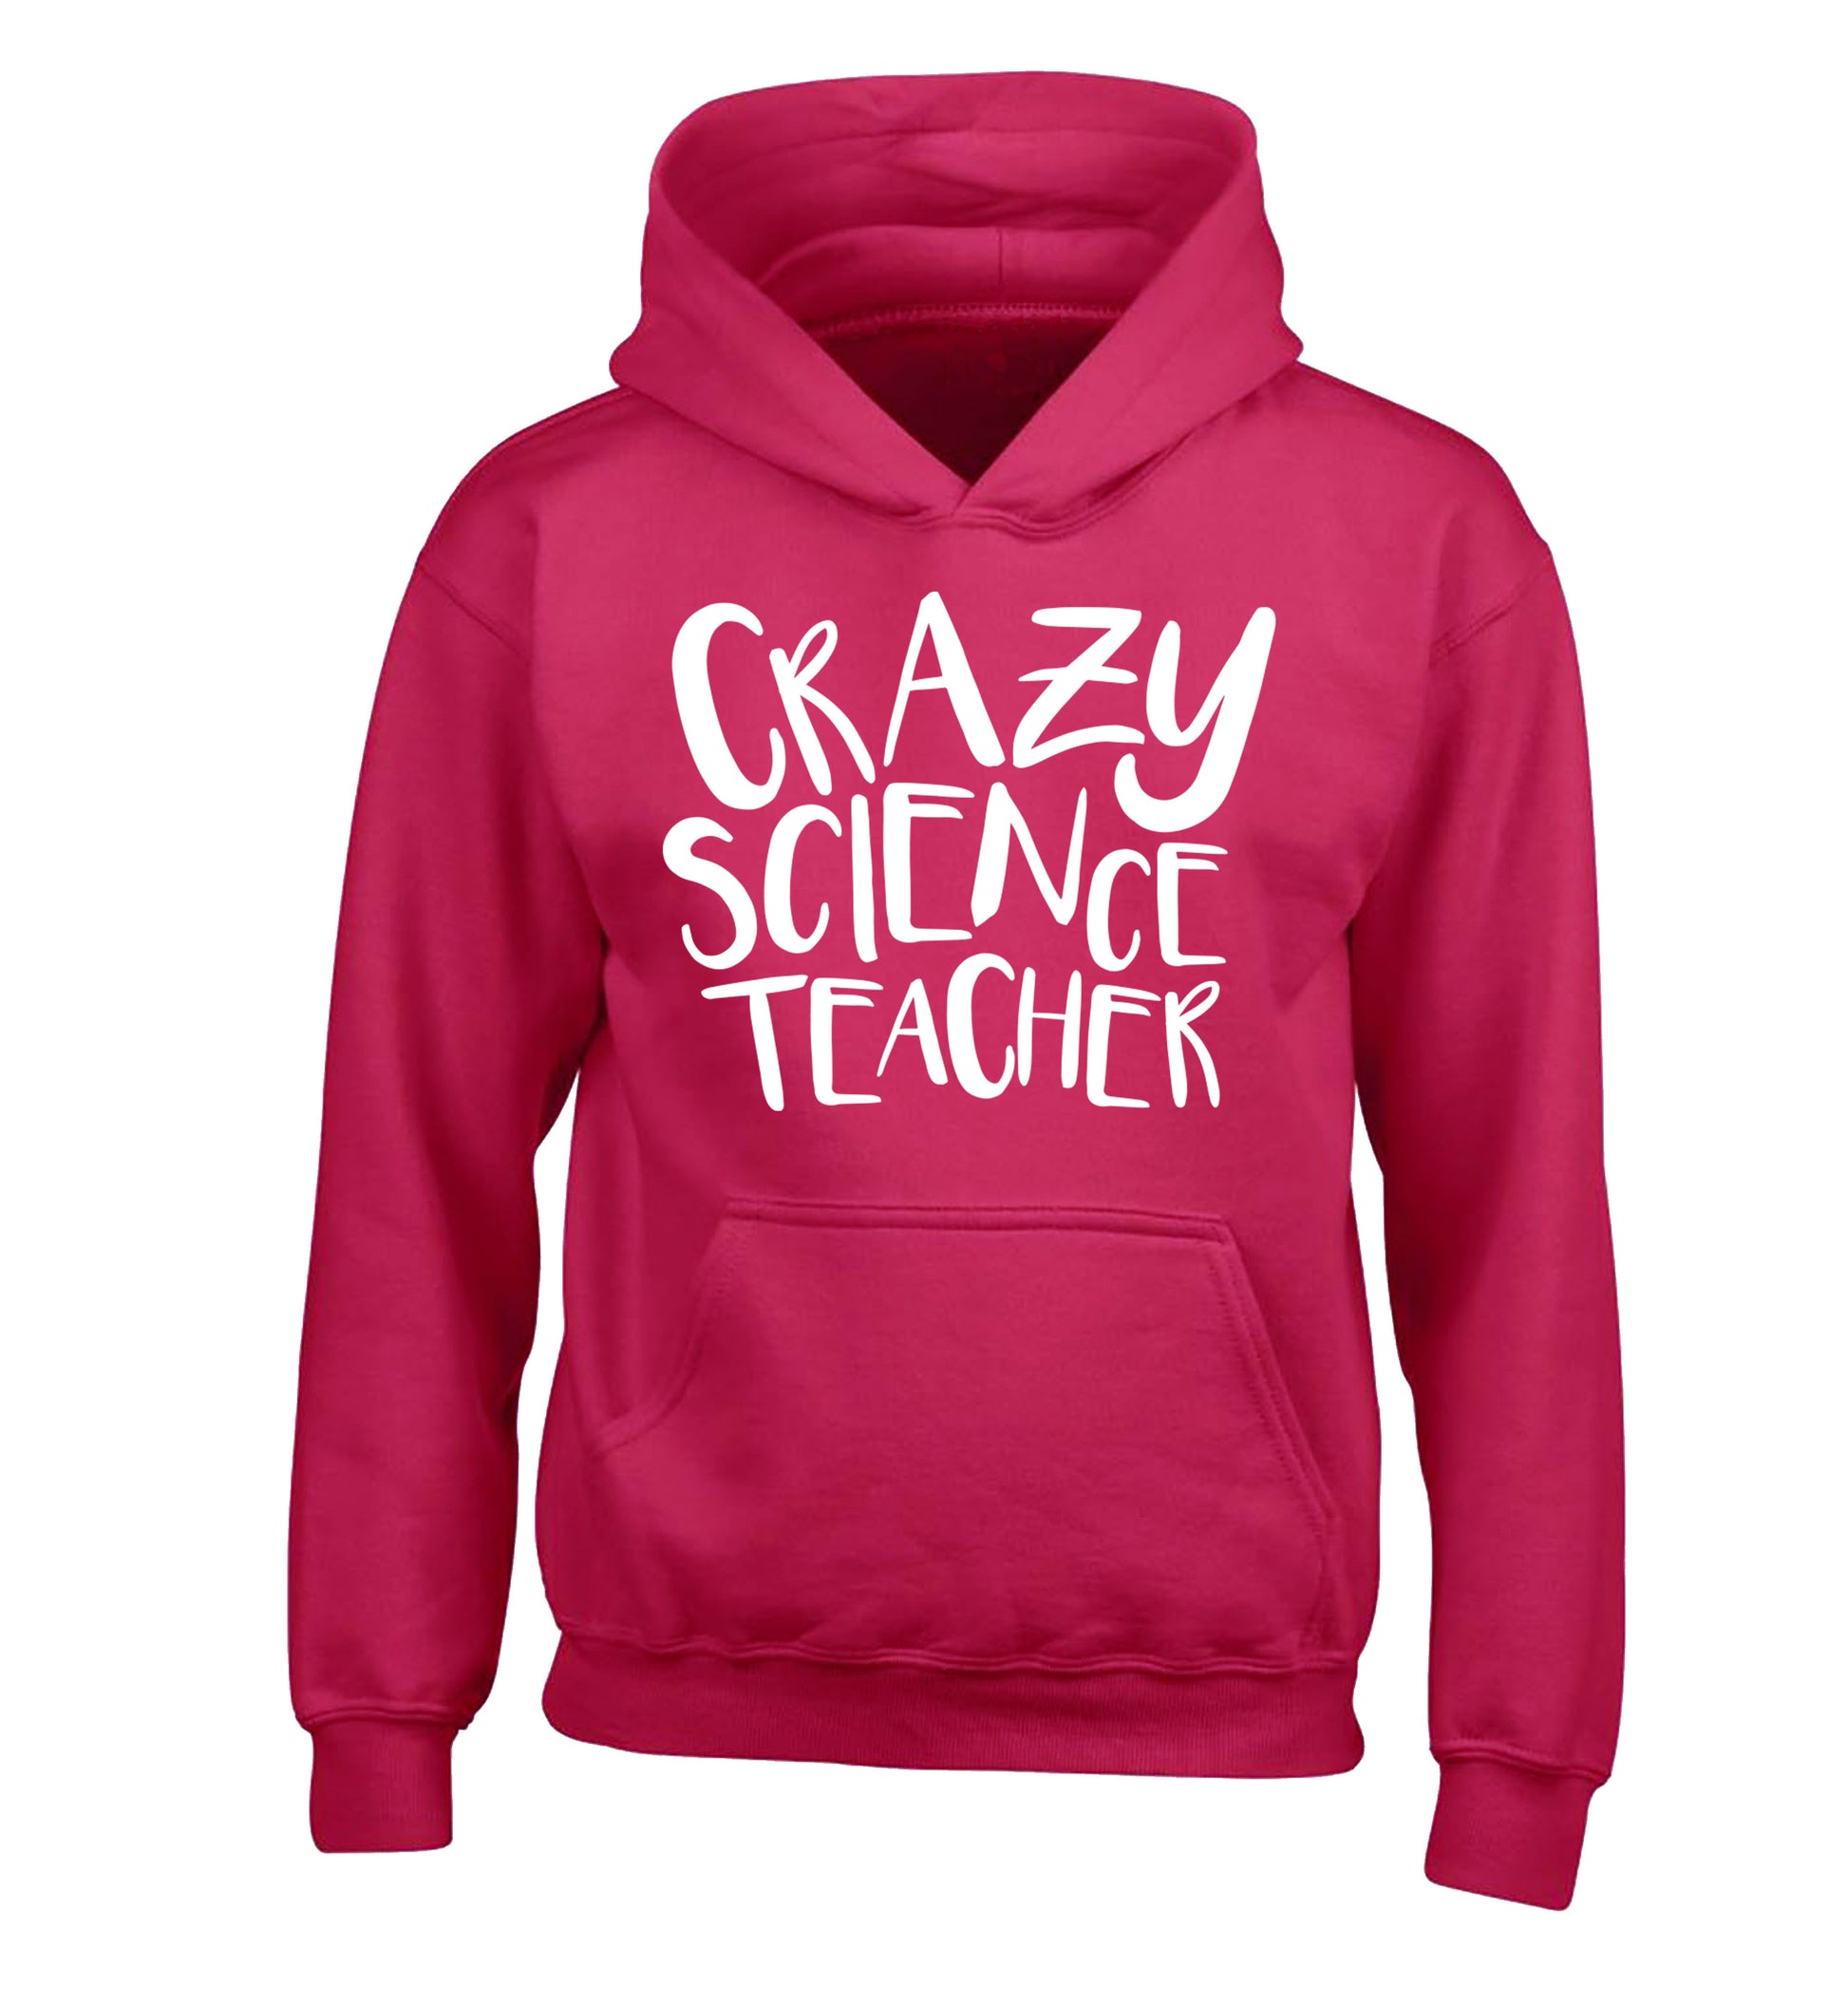 Crazy science teacher children's pink hoodie 12-13 Years